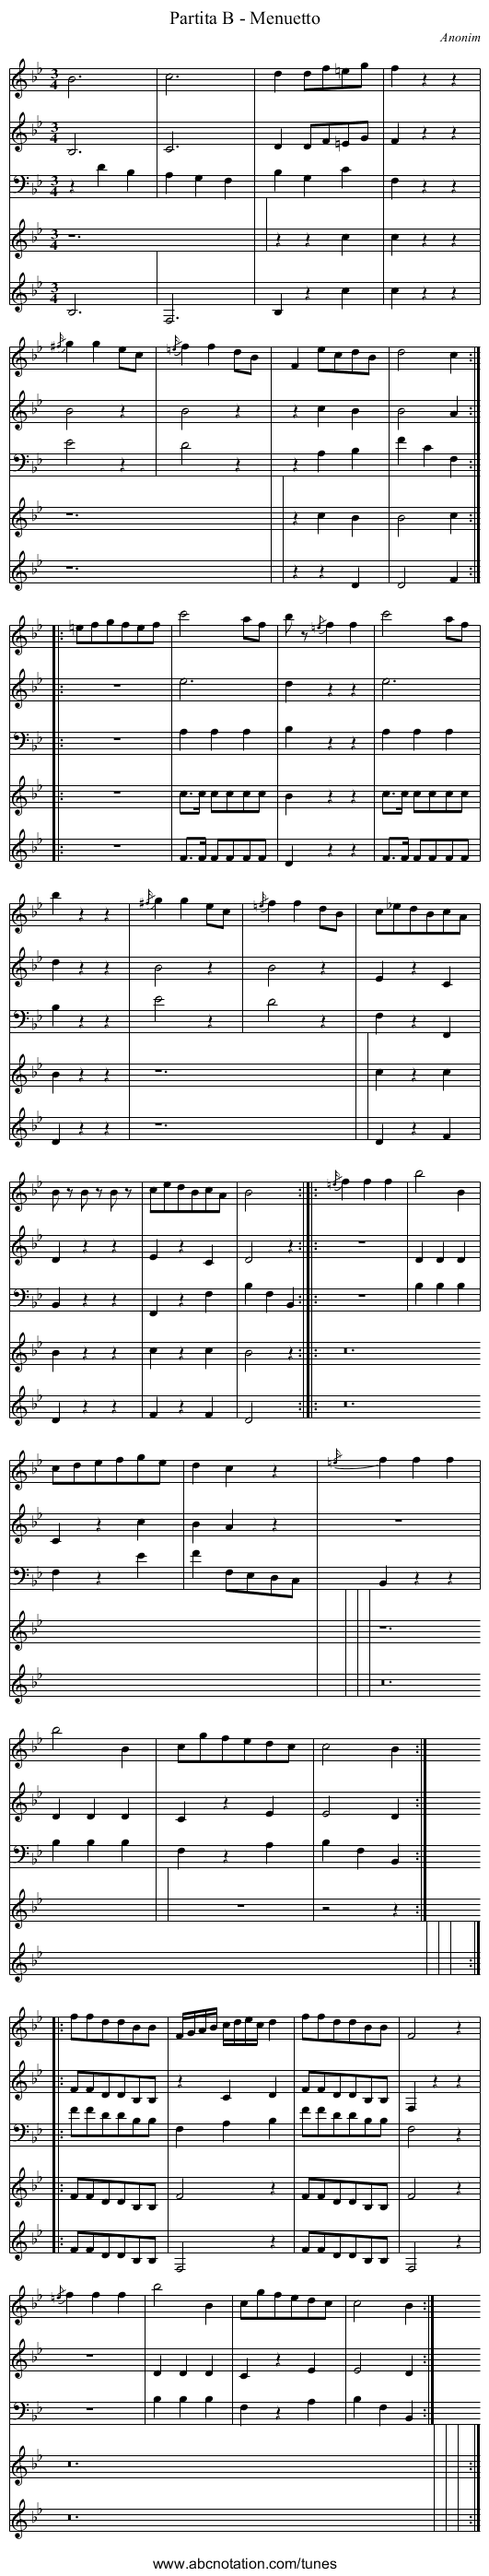 Partita B - Menuetto - staff notation